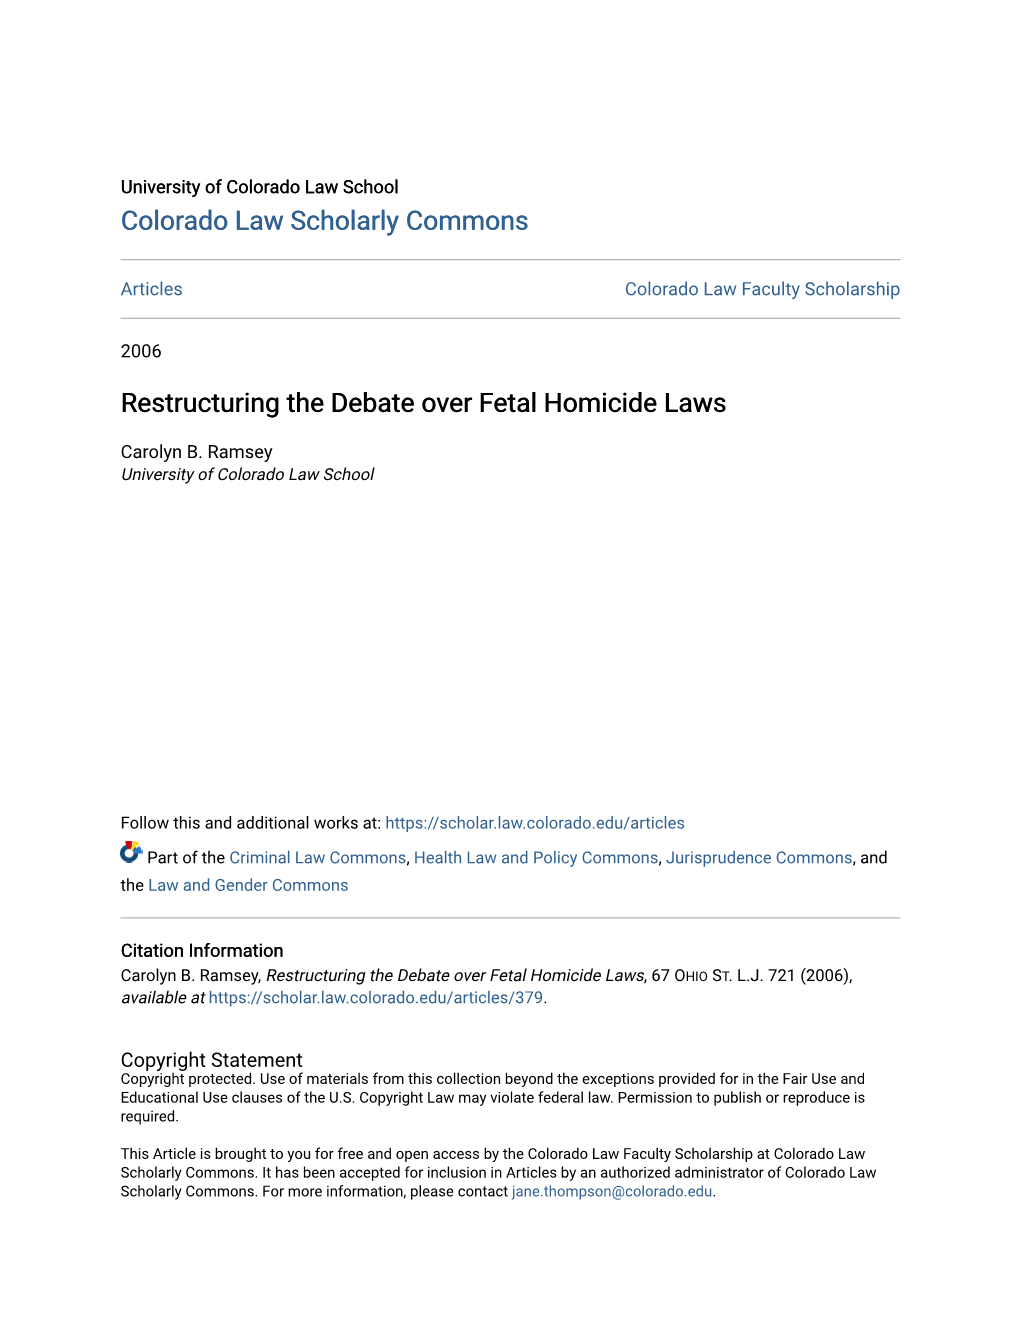 Restructuring the Debate Over Fetal Homicide Laws